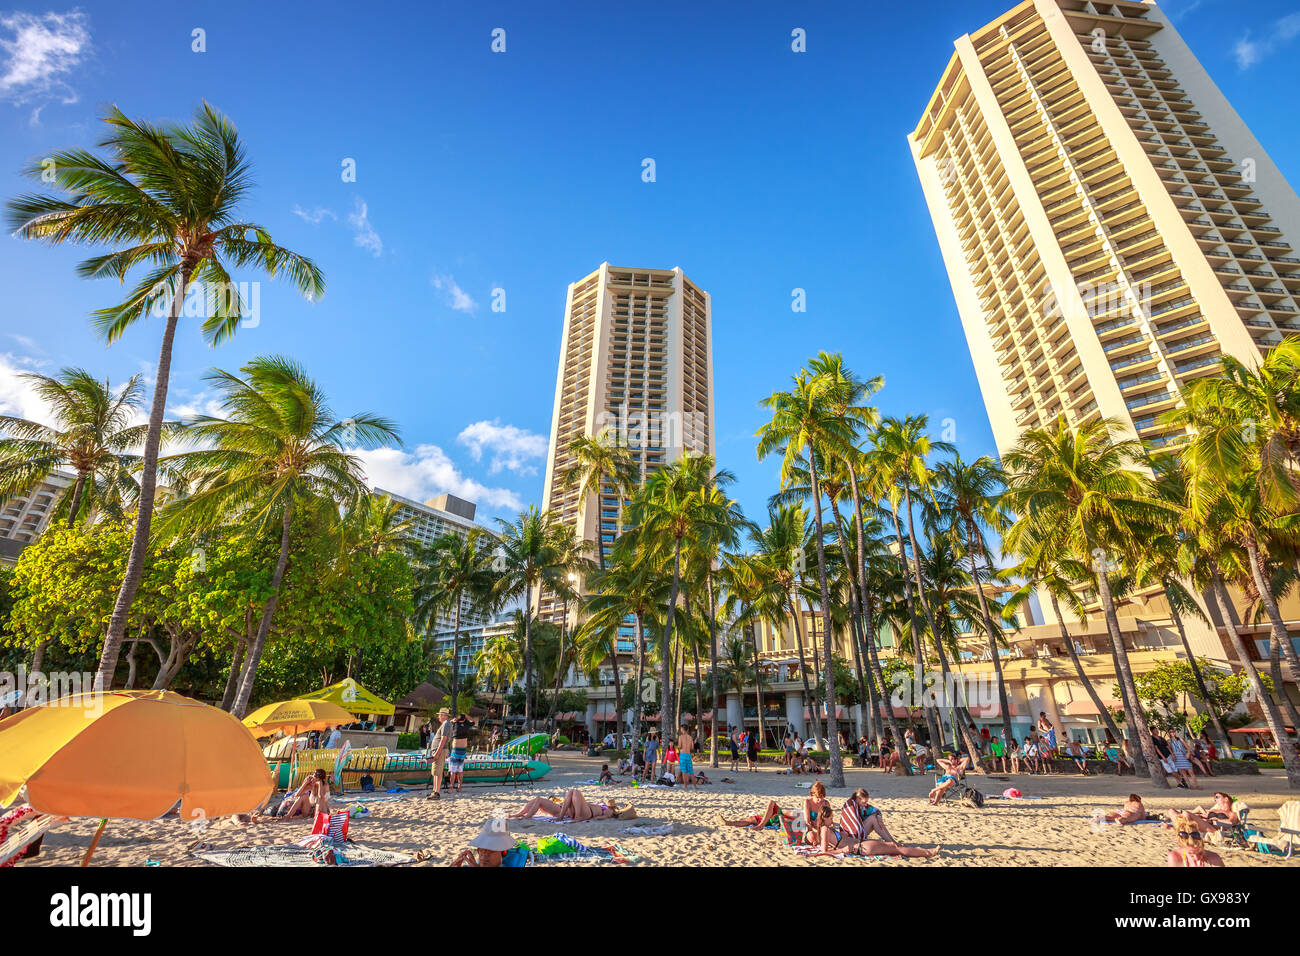 La spiaggia di Waikiki di Oahu Foto Stock